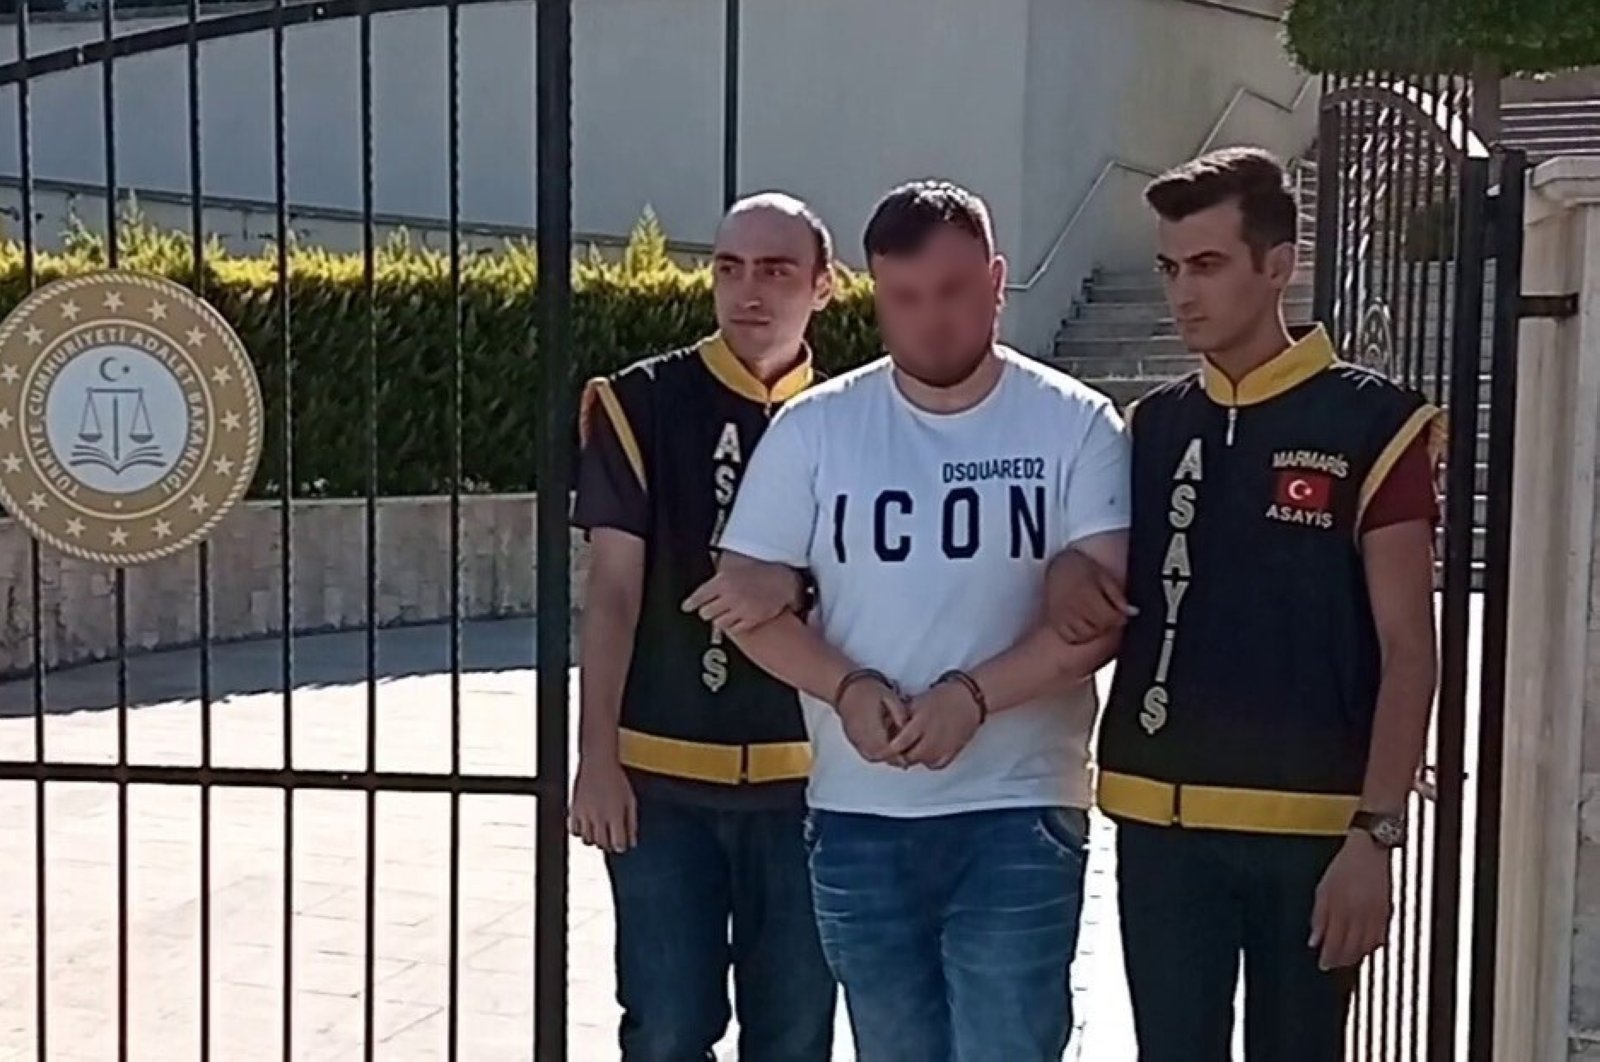 Warga Inggris ditangkap atas dugaan pembunuhan ayahnya di Turki